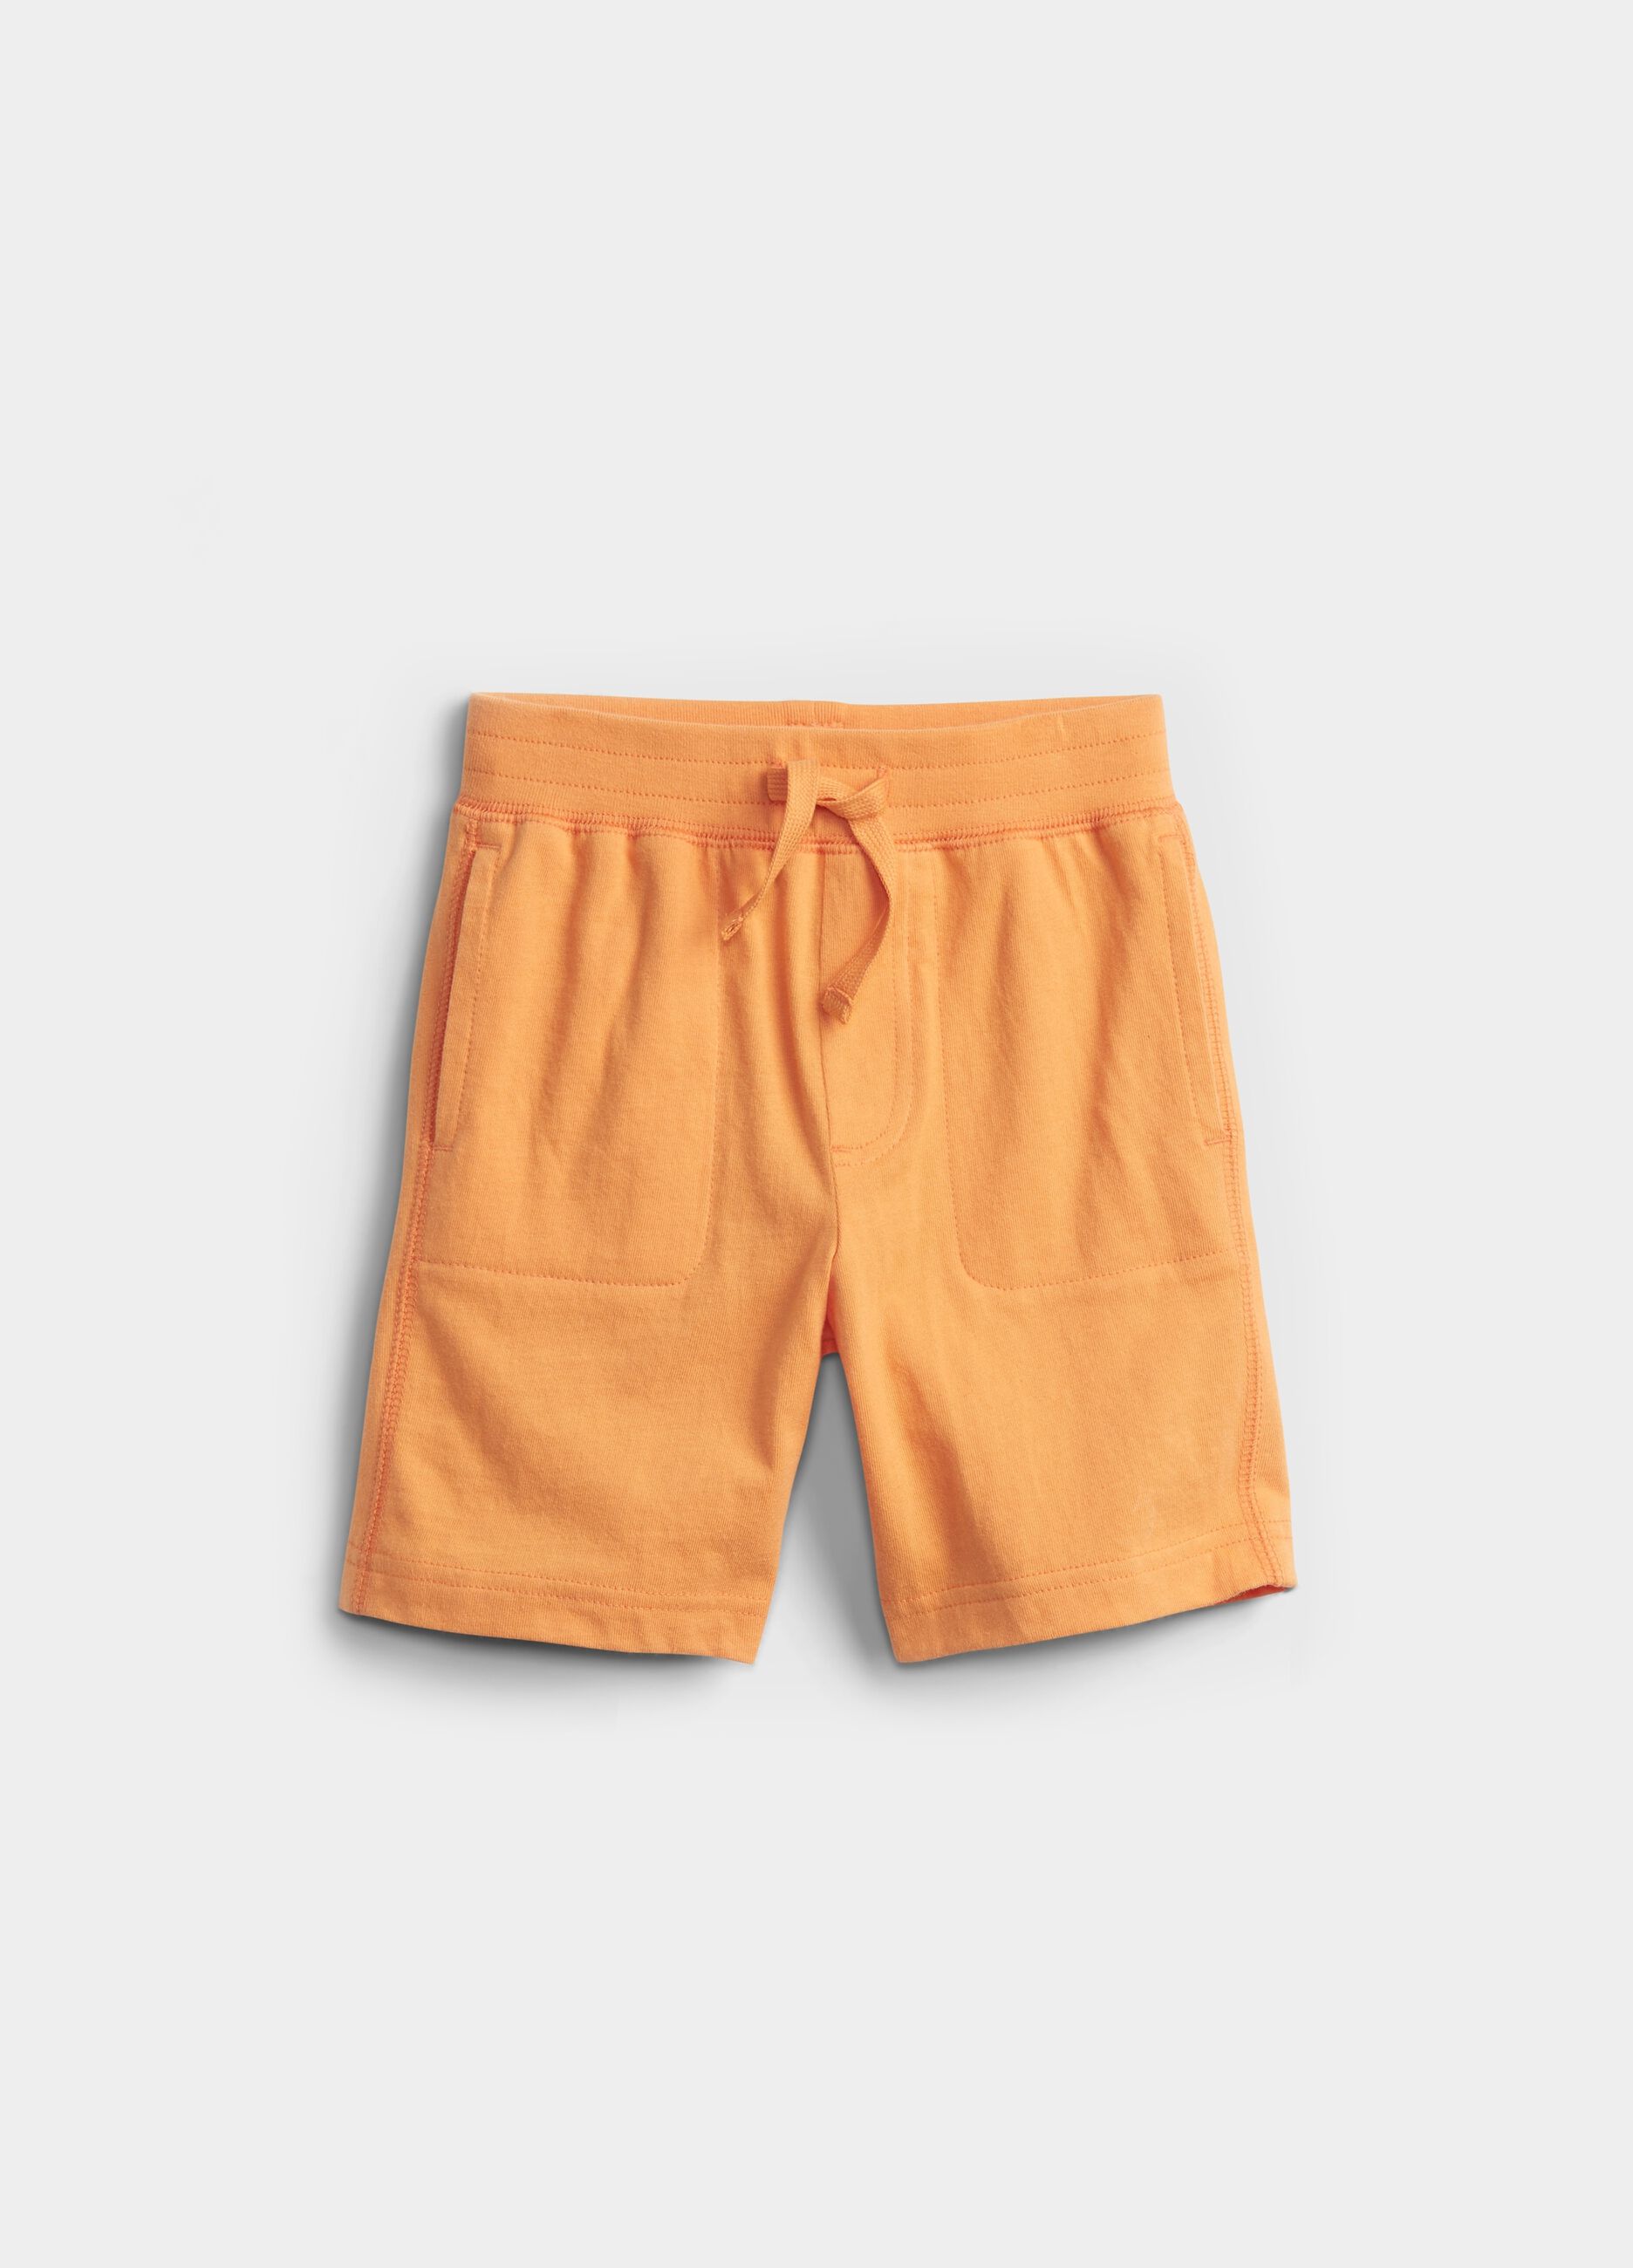 Bermuda shorts in fleece